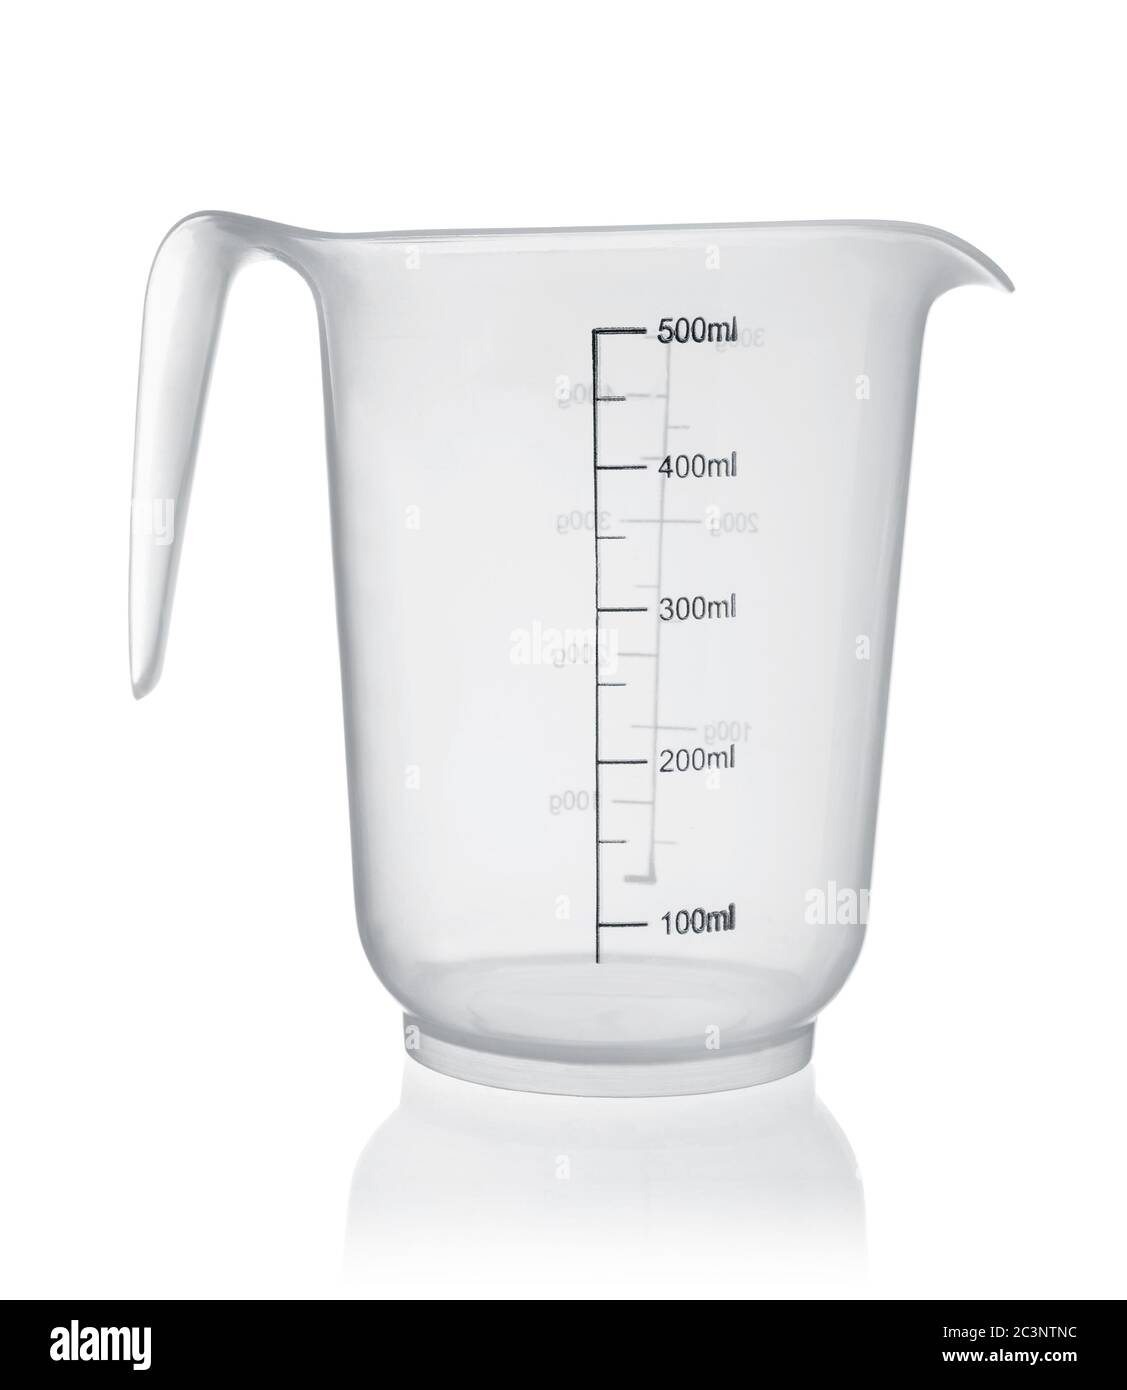 https://c8.alamy.com/comp/2C3NTNC/empty-measuring-plastic-cup-with-handle-isolated-on-white-2C3NTNC.jpg